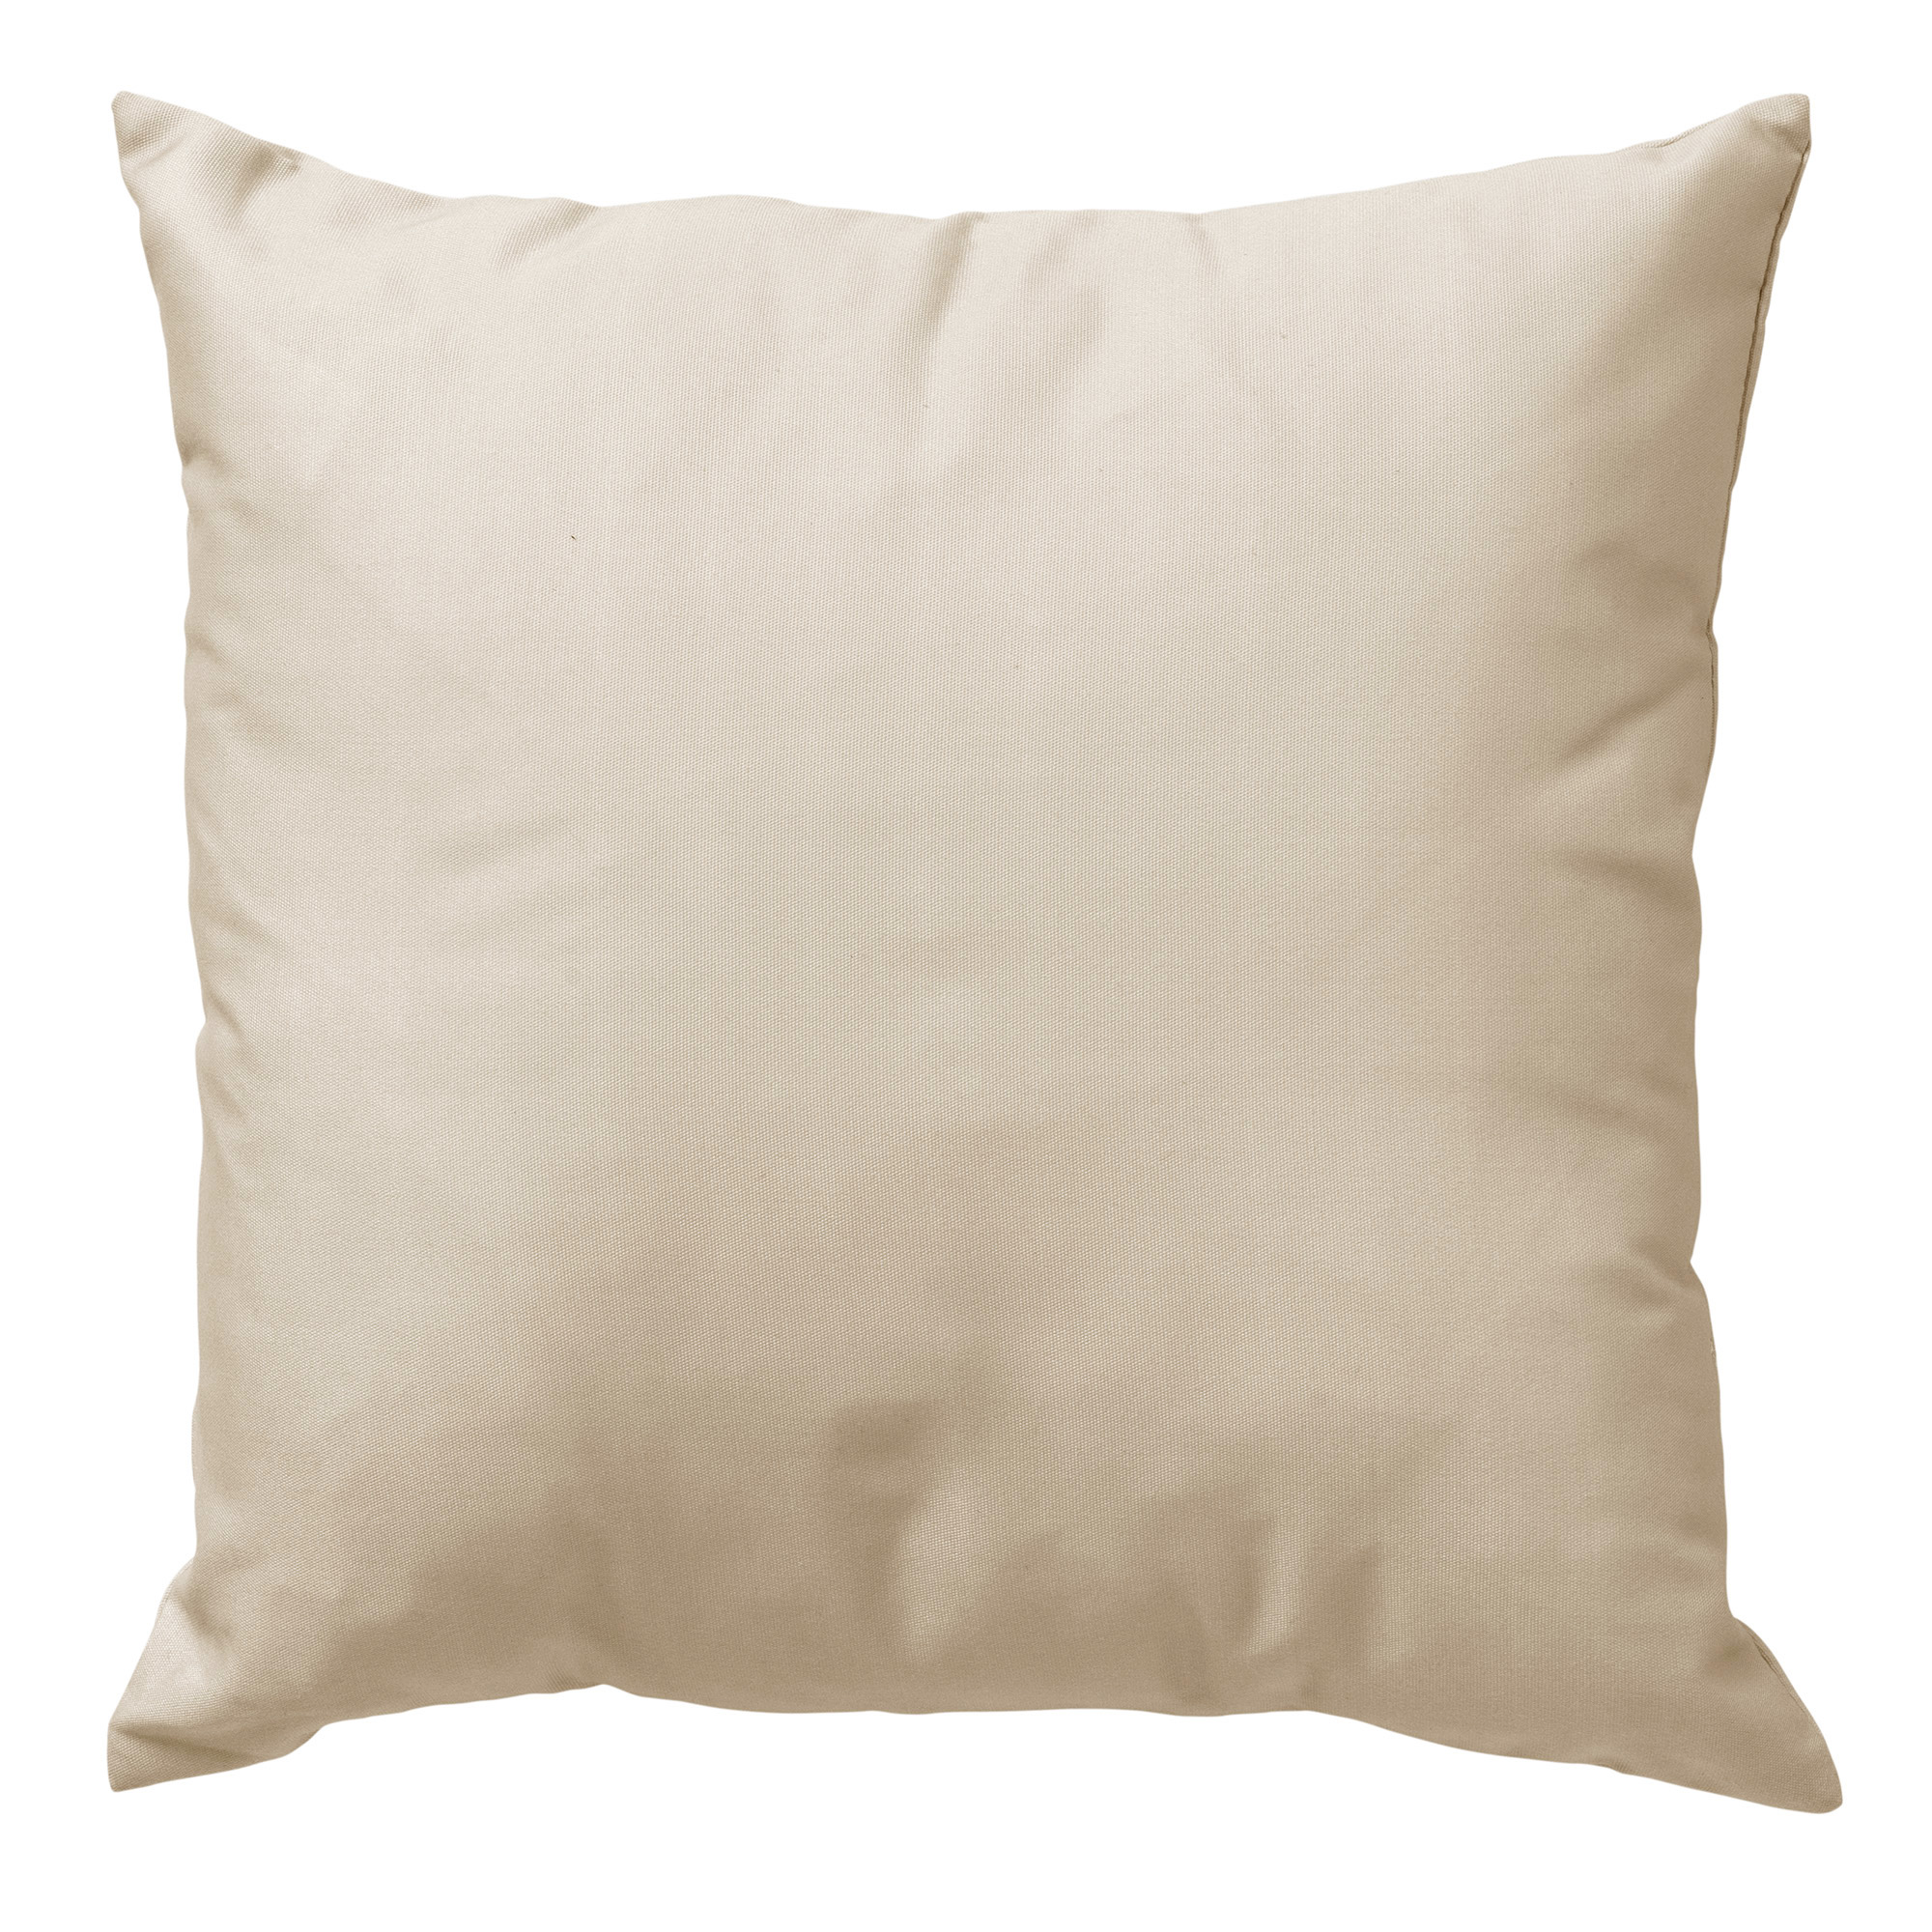 SANTORINI - Cushion outdoor 45x45 cm Pumice Stone - water-repellent and UV-resistant - beige